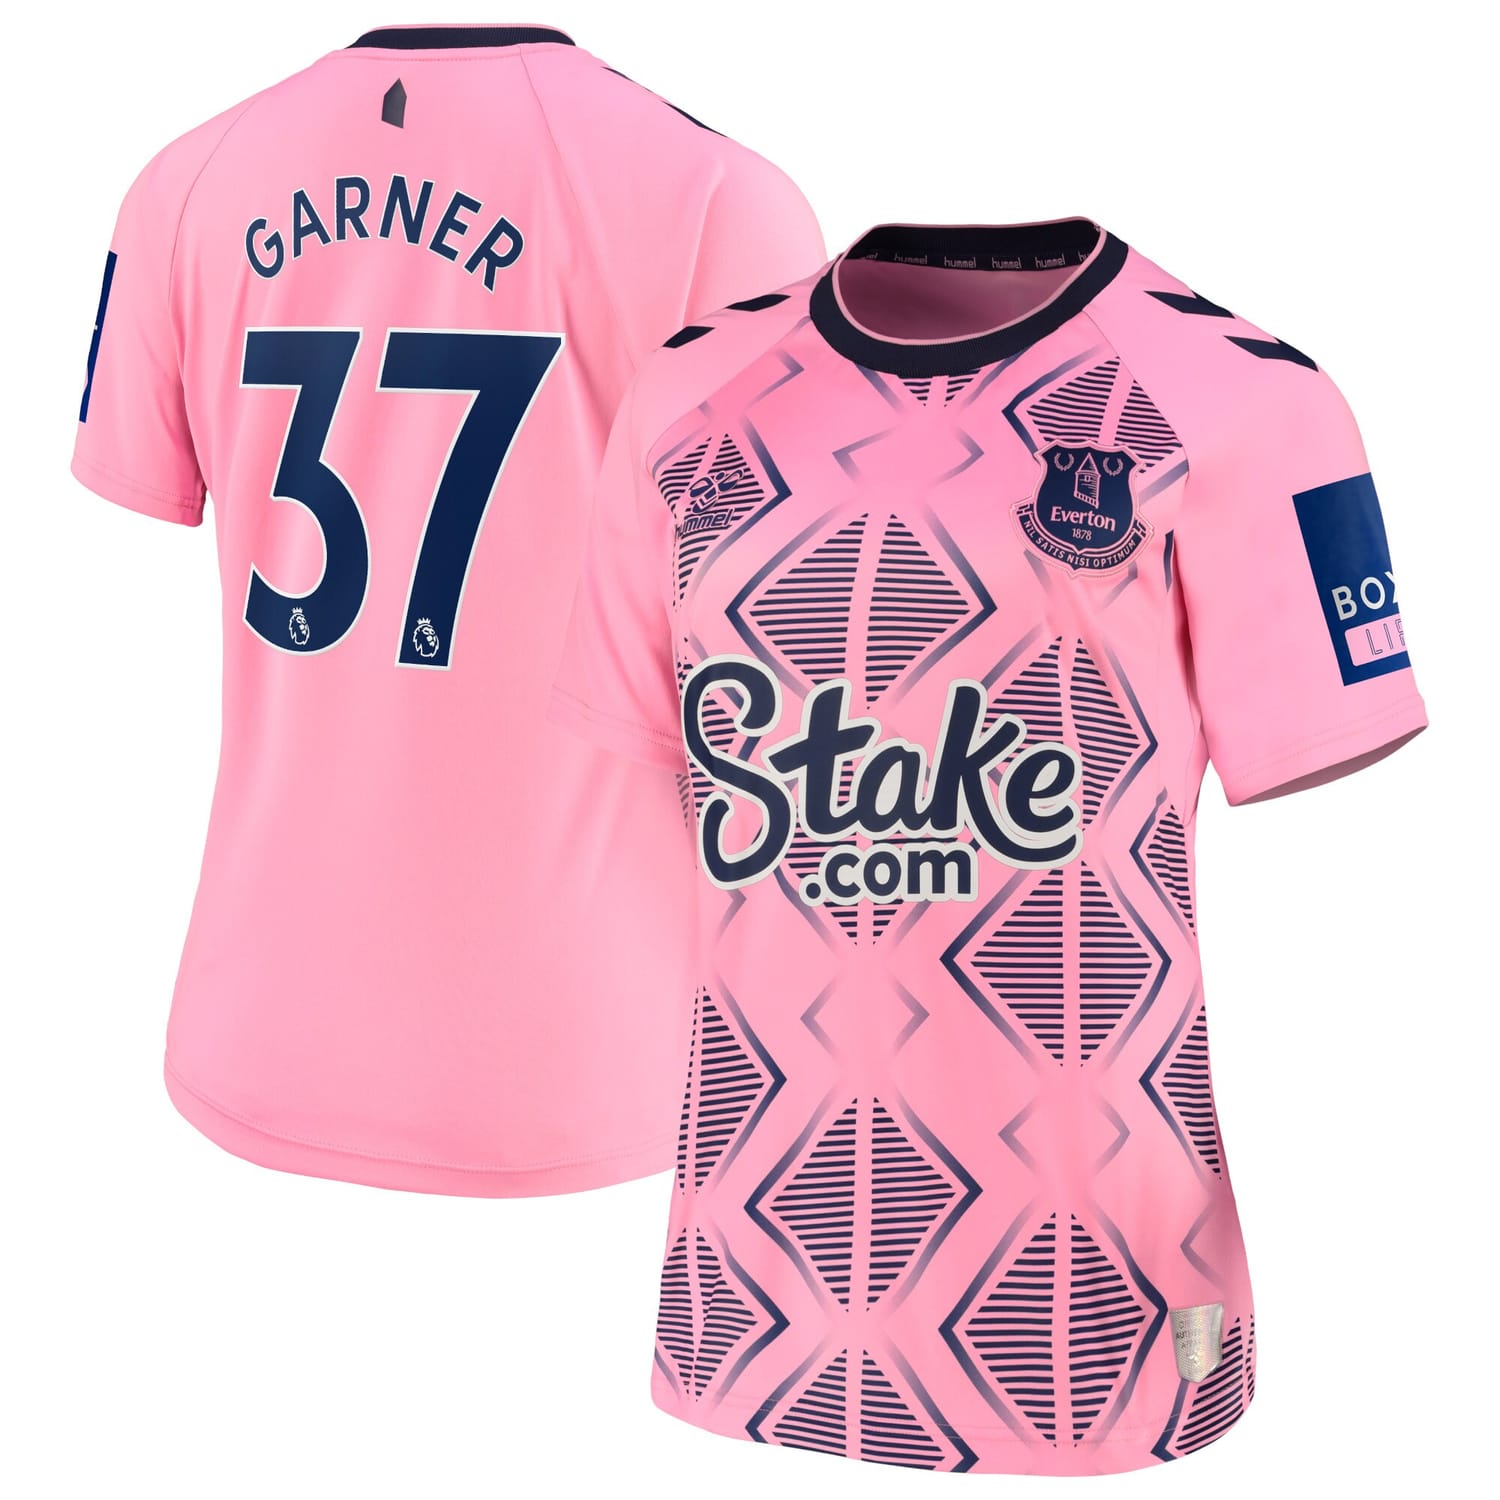 Premier League Everton Away Jersey Shirt 2022-23 player James Garner 37 printing for Women